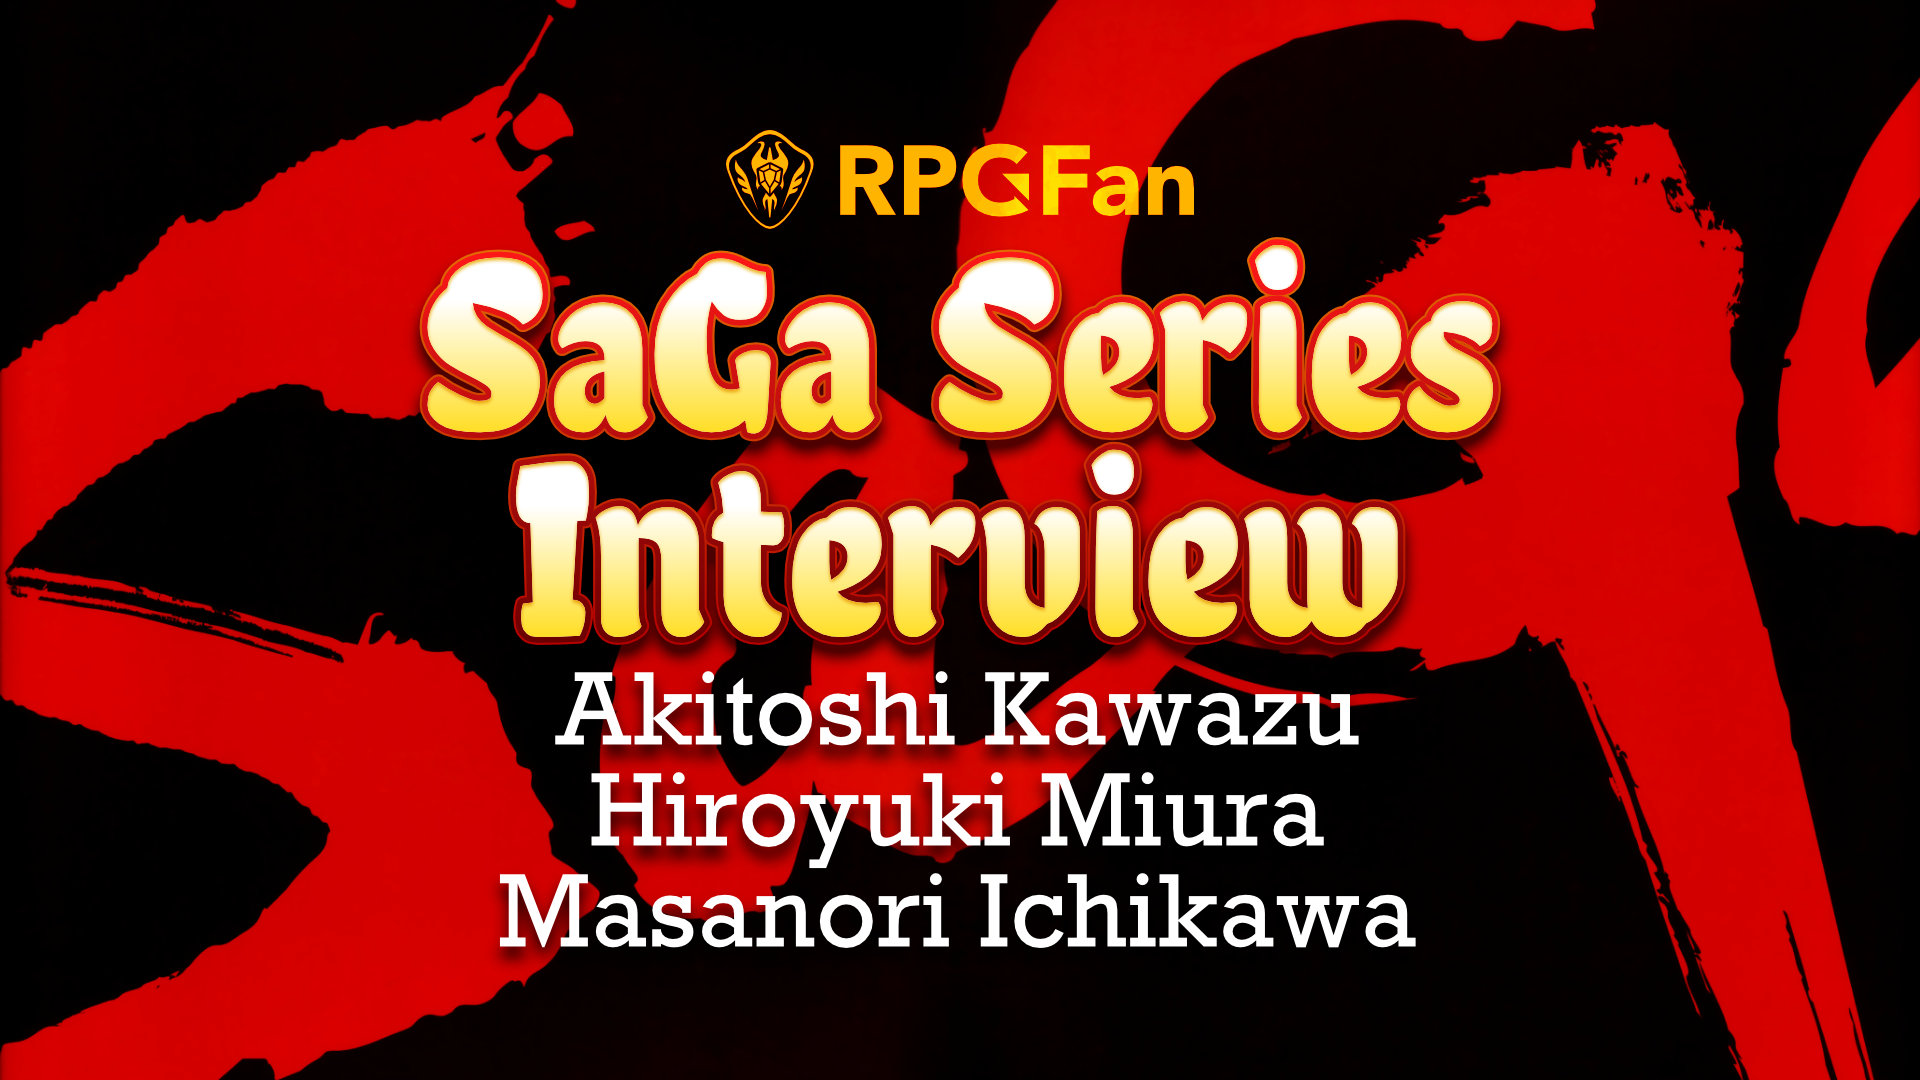 SaGa Series Interview with Akitoshi Kawazu, Hiroyuki Miura, and Masanori Ichikawa